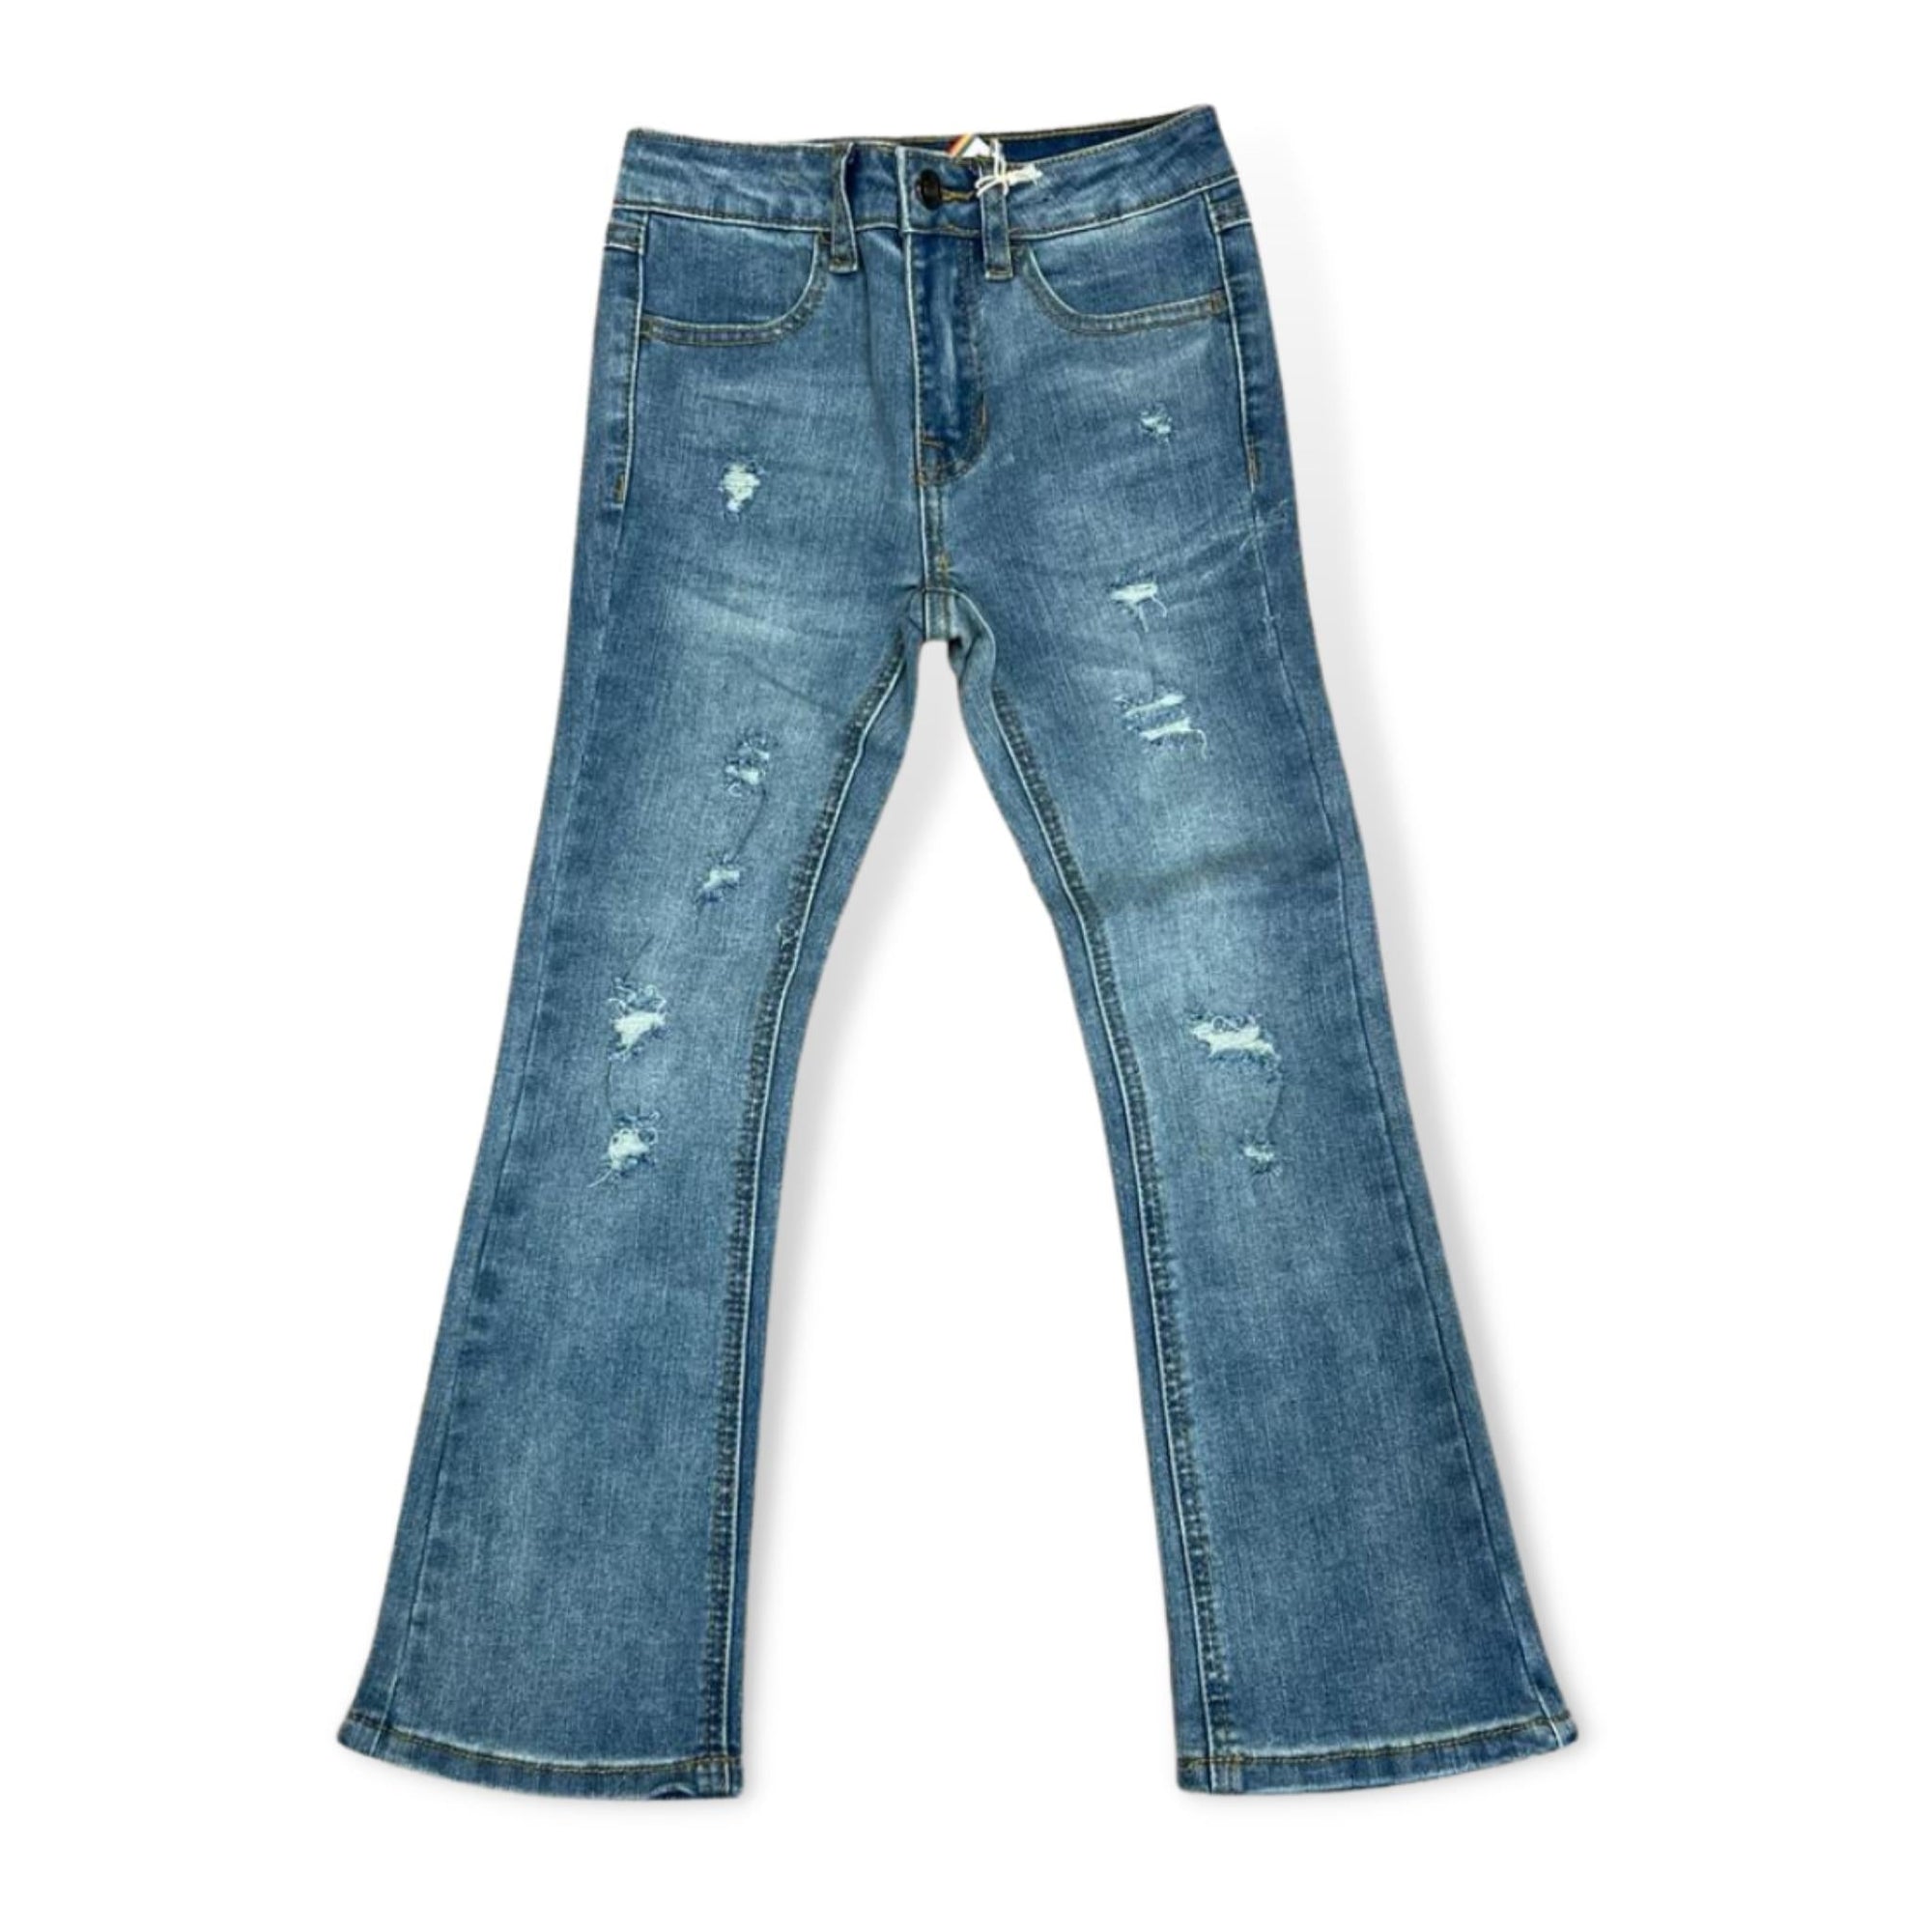 Vintage Havana Light Medium Wash High Rise Kick Flare Jean - a Spirit Animal - jeans $30-$60 $60-$90 10